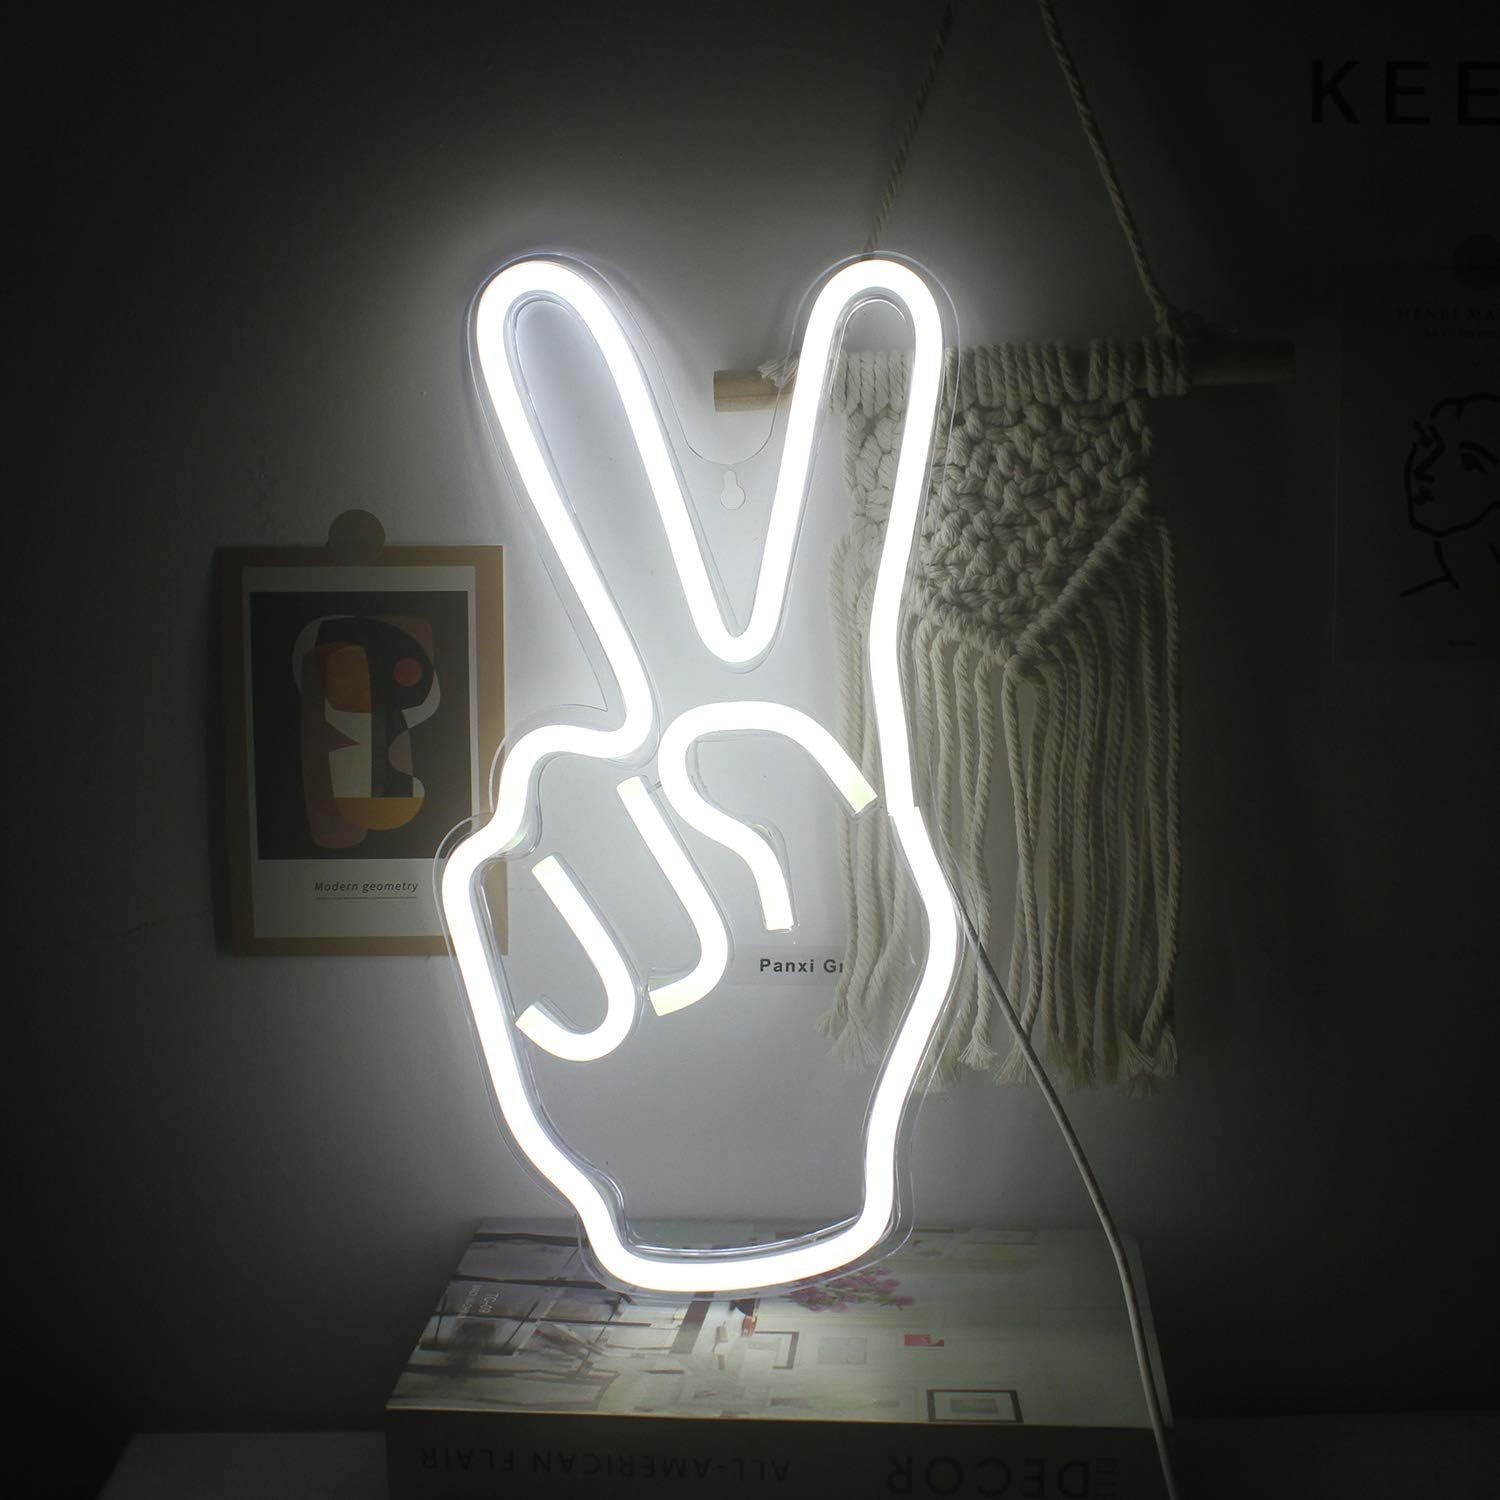 (1-St) LED Sign Stirnlampe Wandschild zggzerg Neon Victory Peace Licht Gesture LED Wandleuchten